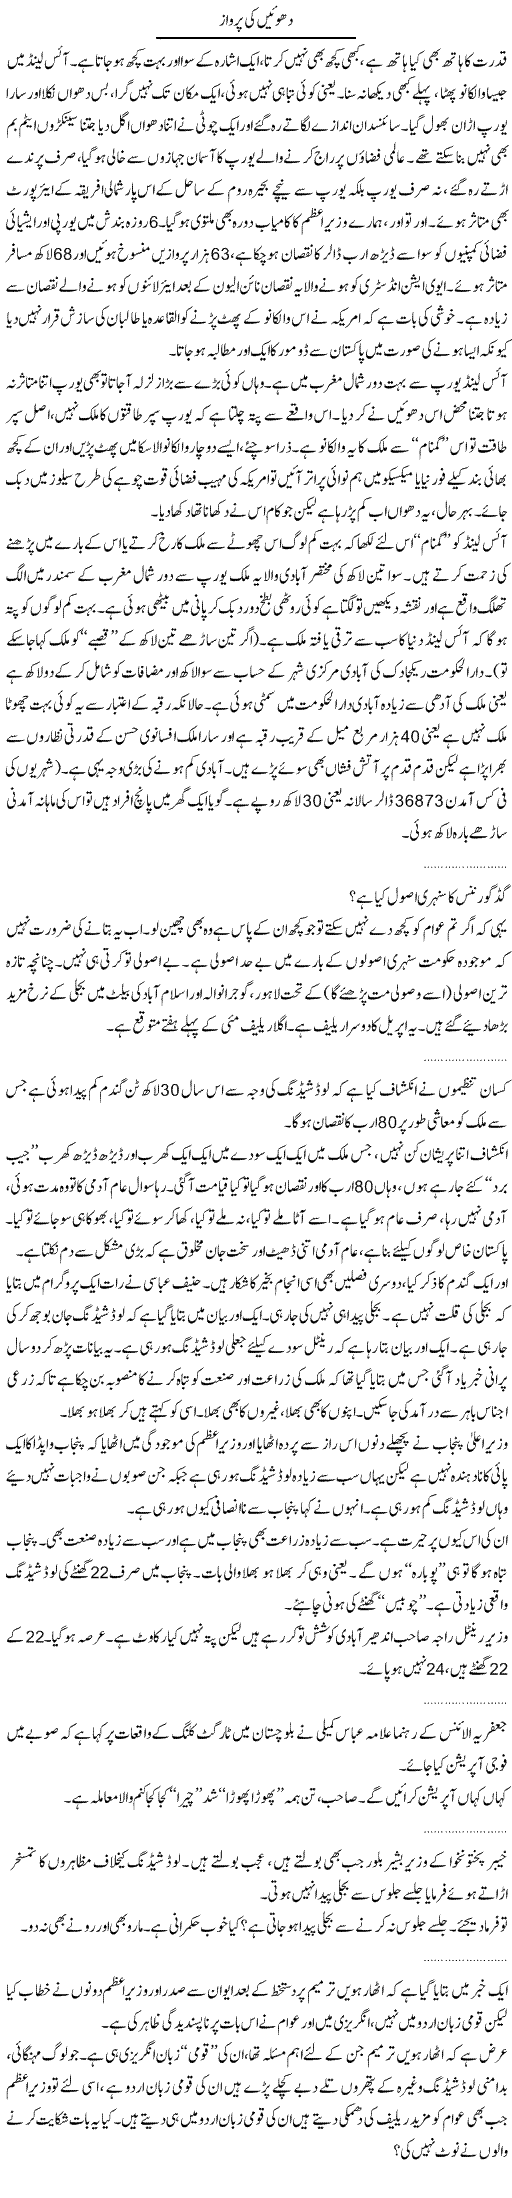 Dhuen ki Parwaz Express Column Abdullah Tariq 22 April 2010